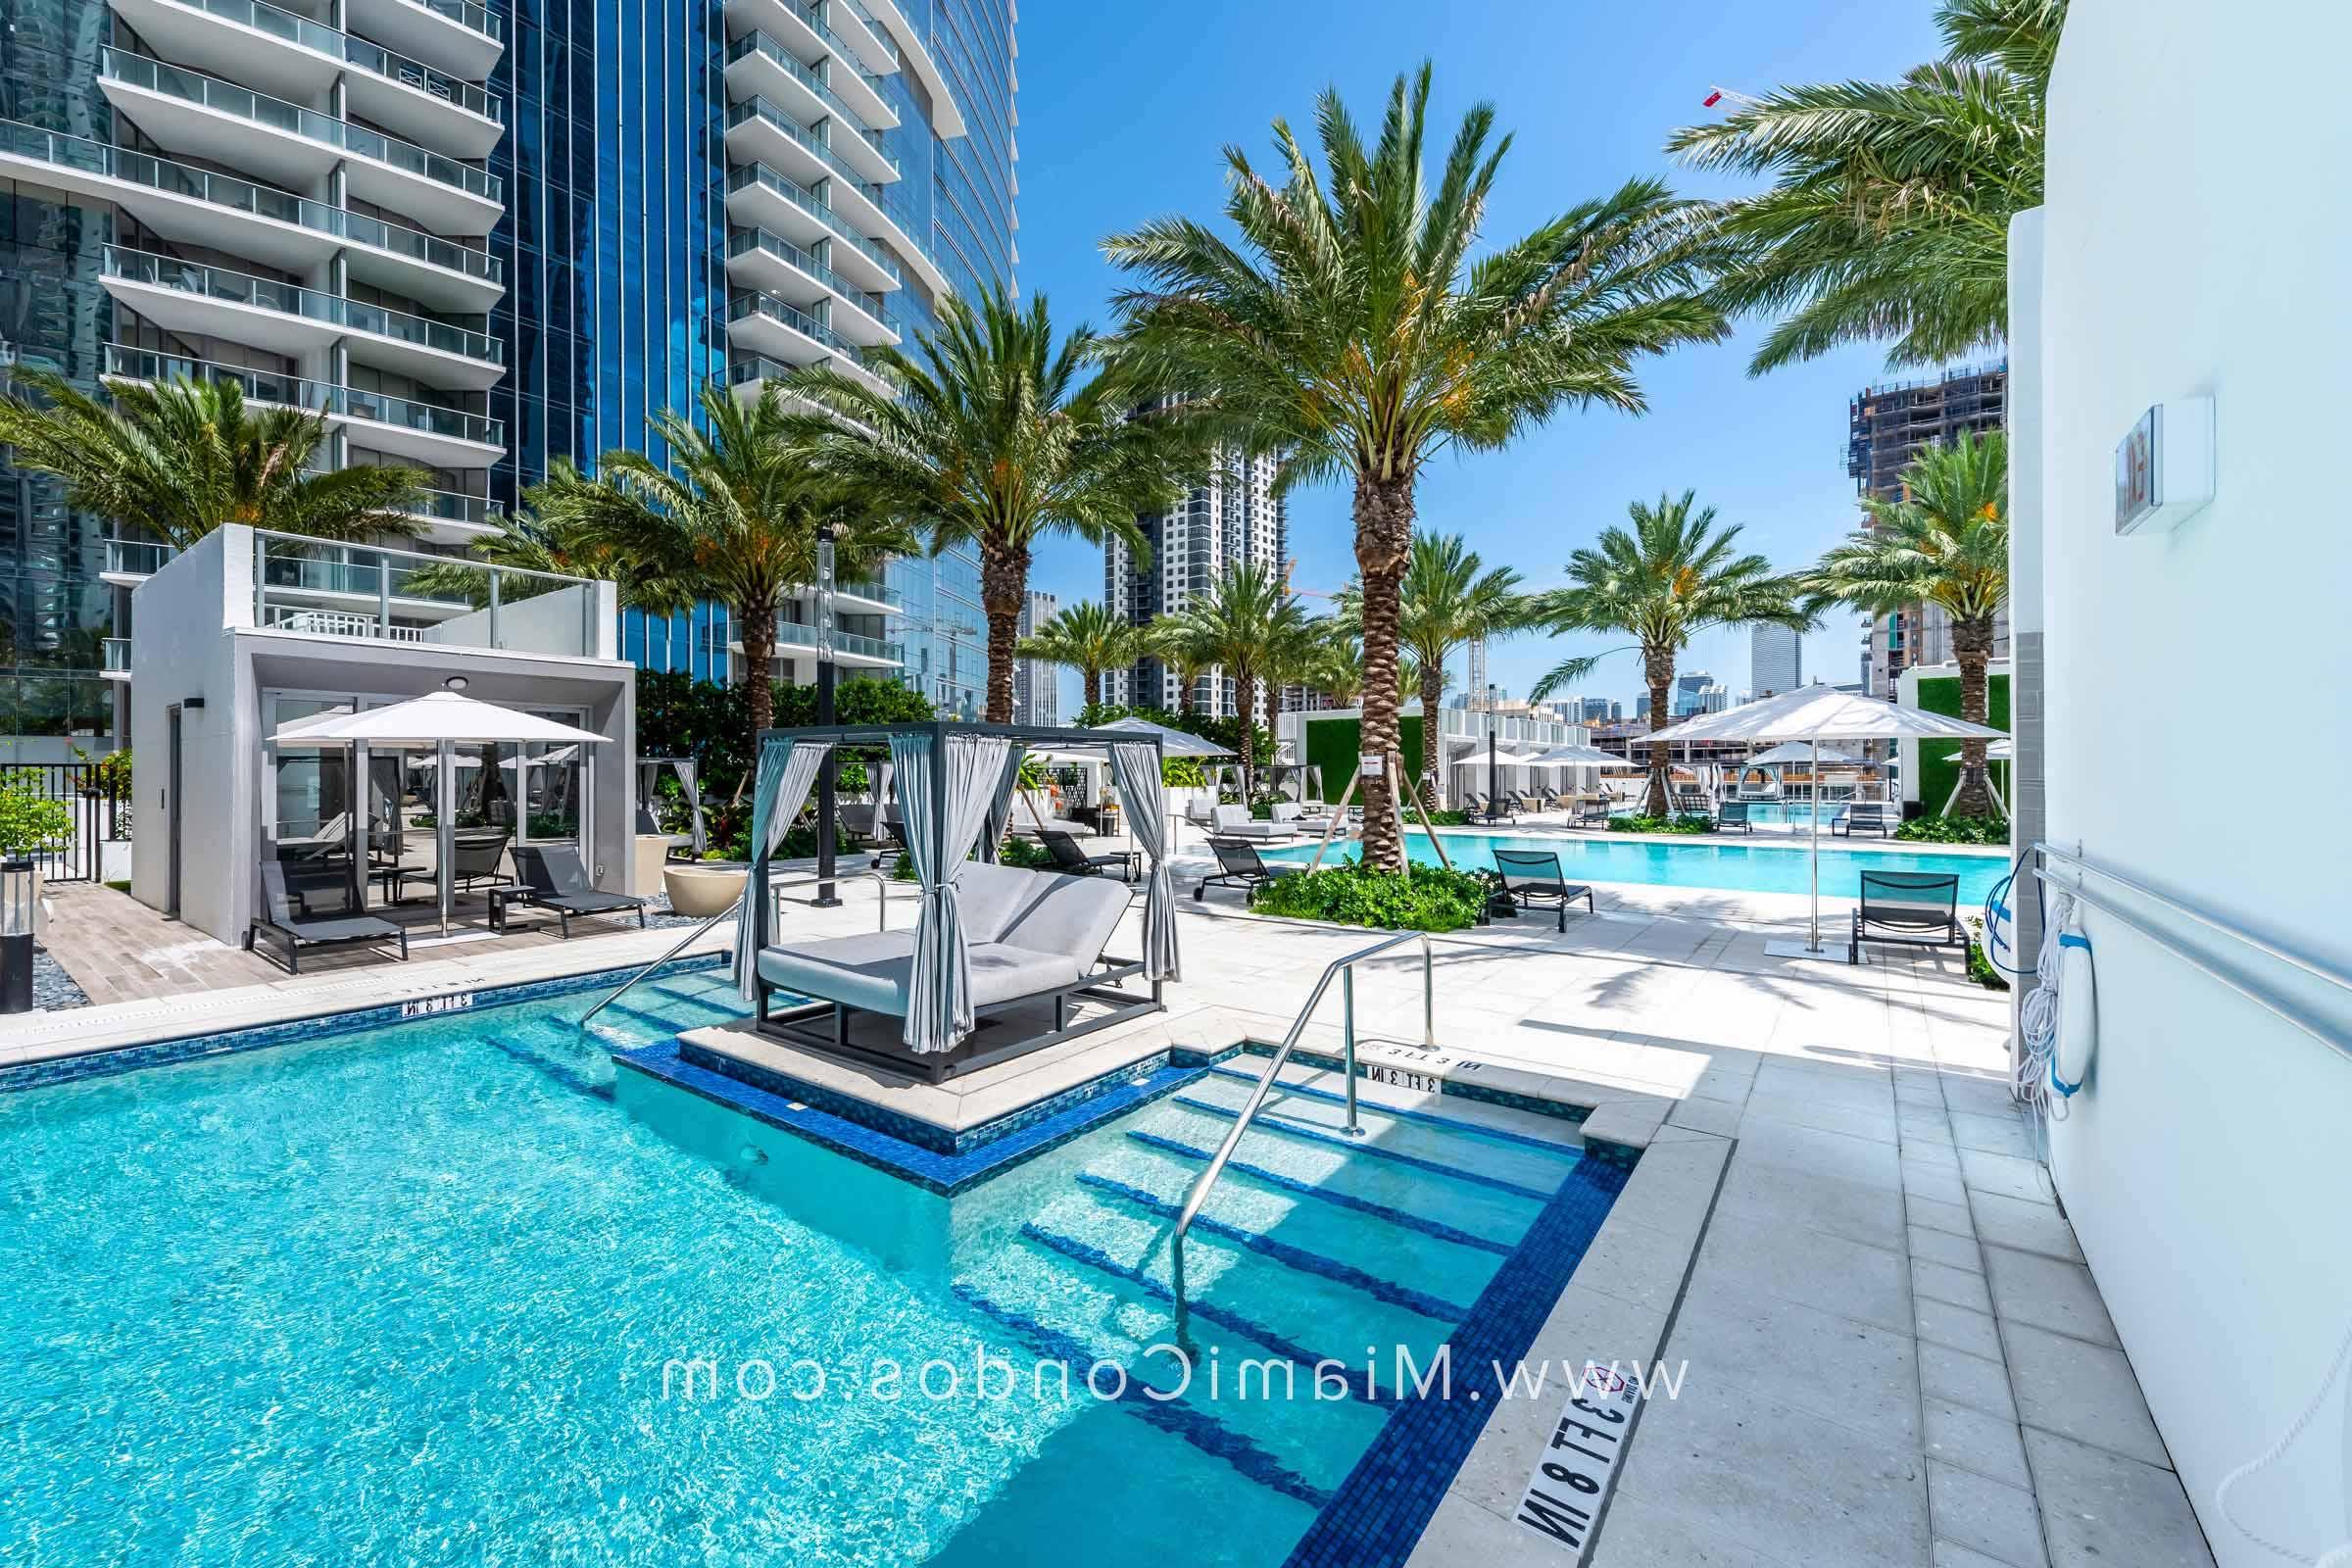 Paramount Miami Worldcenter Pool and Cabanas